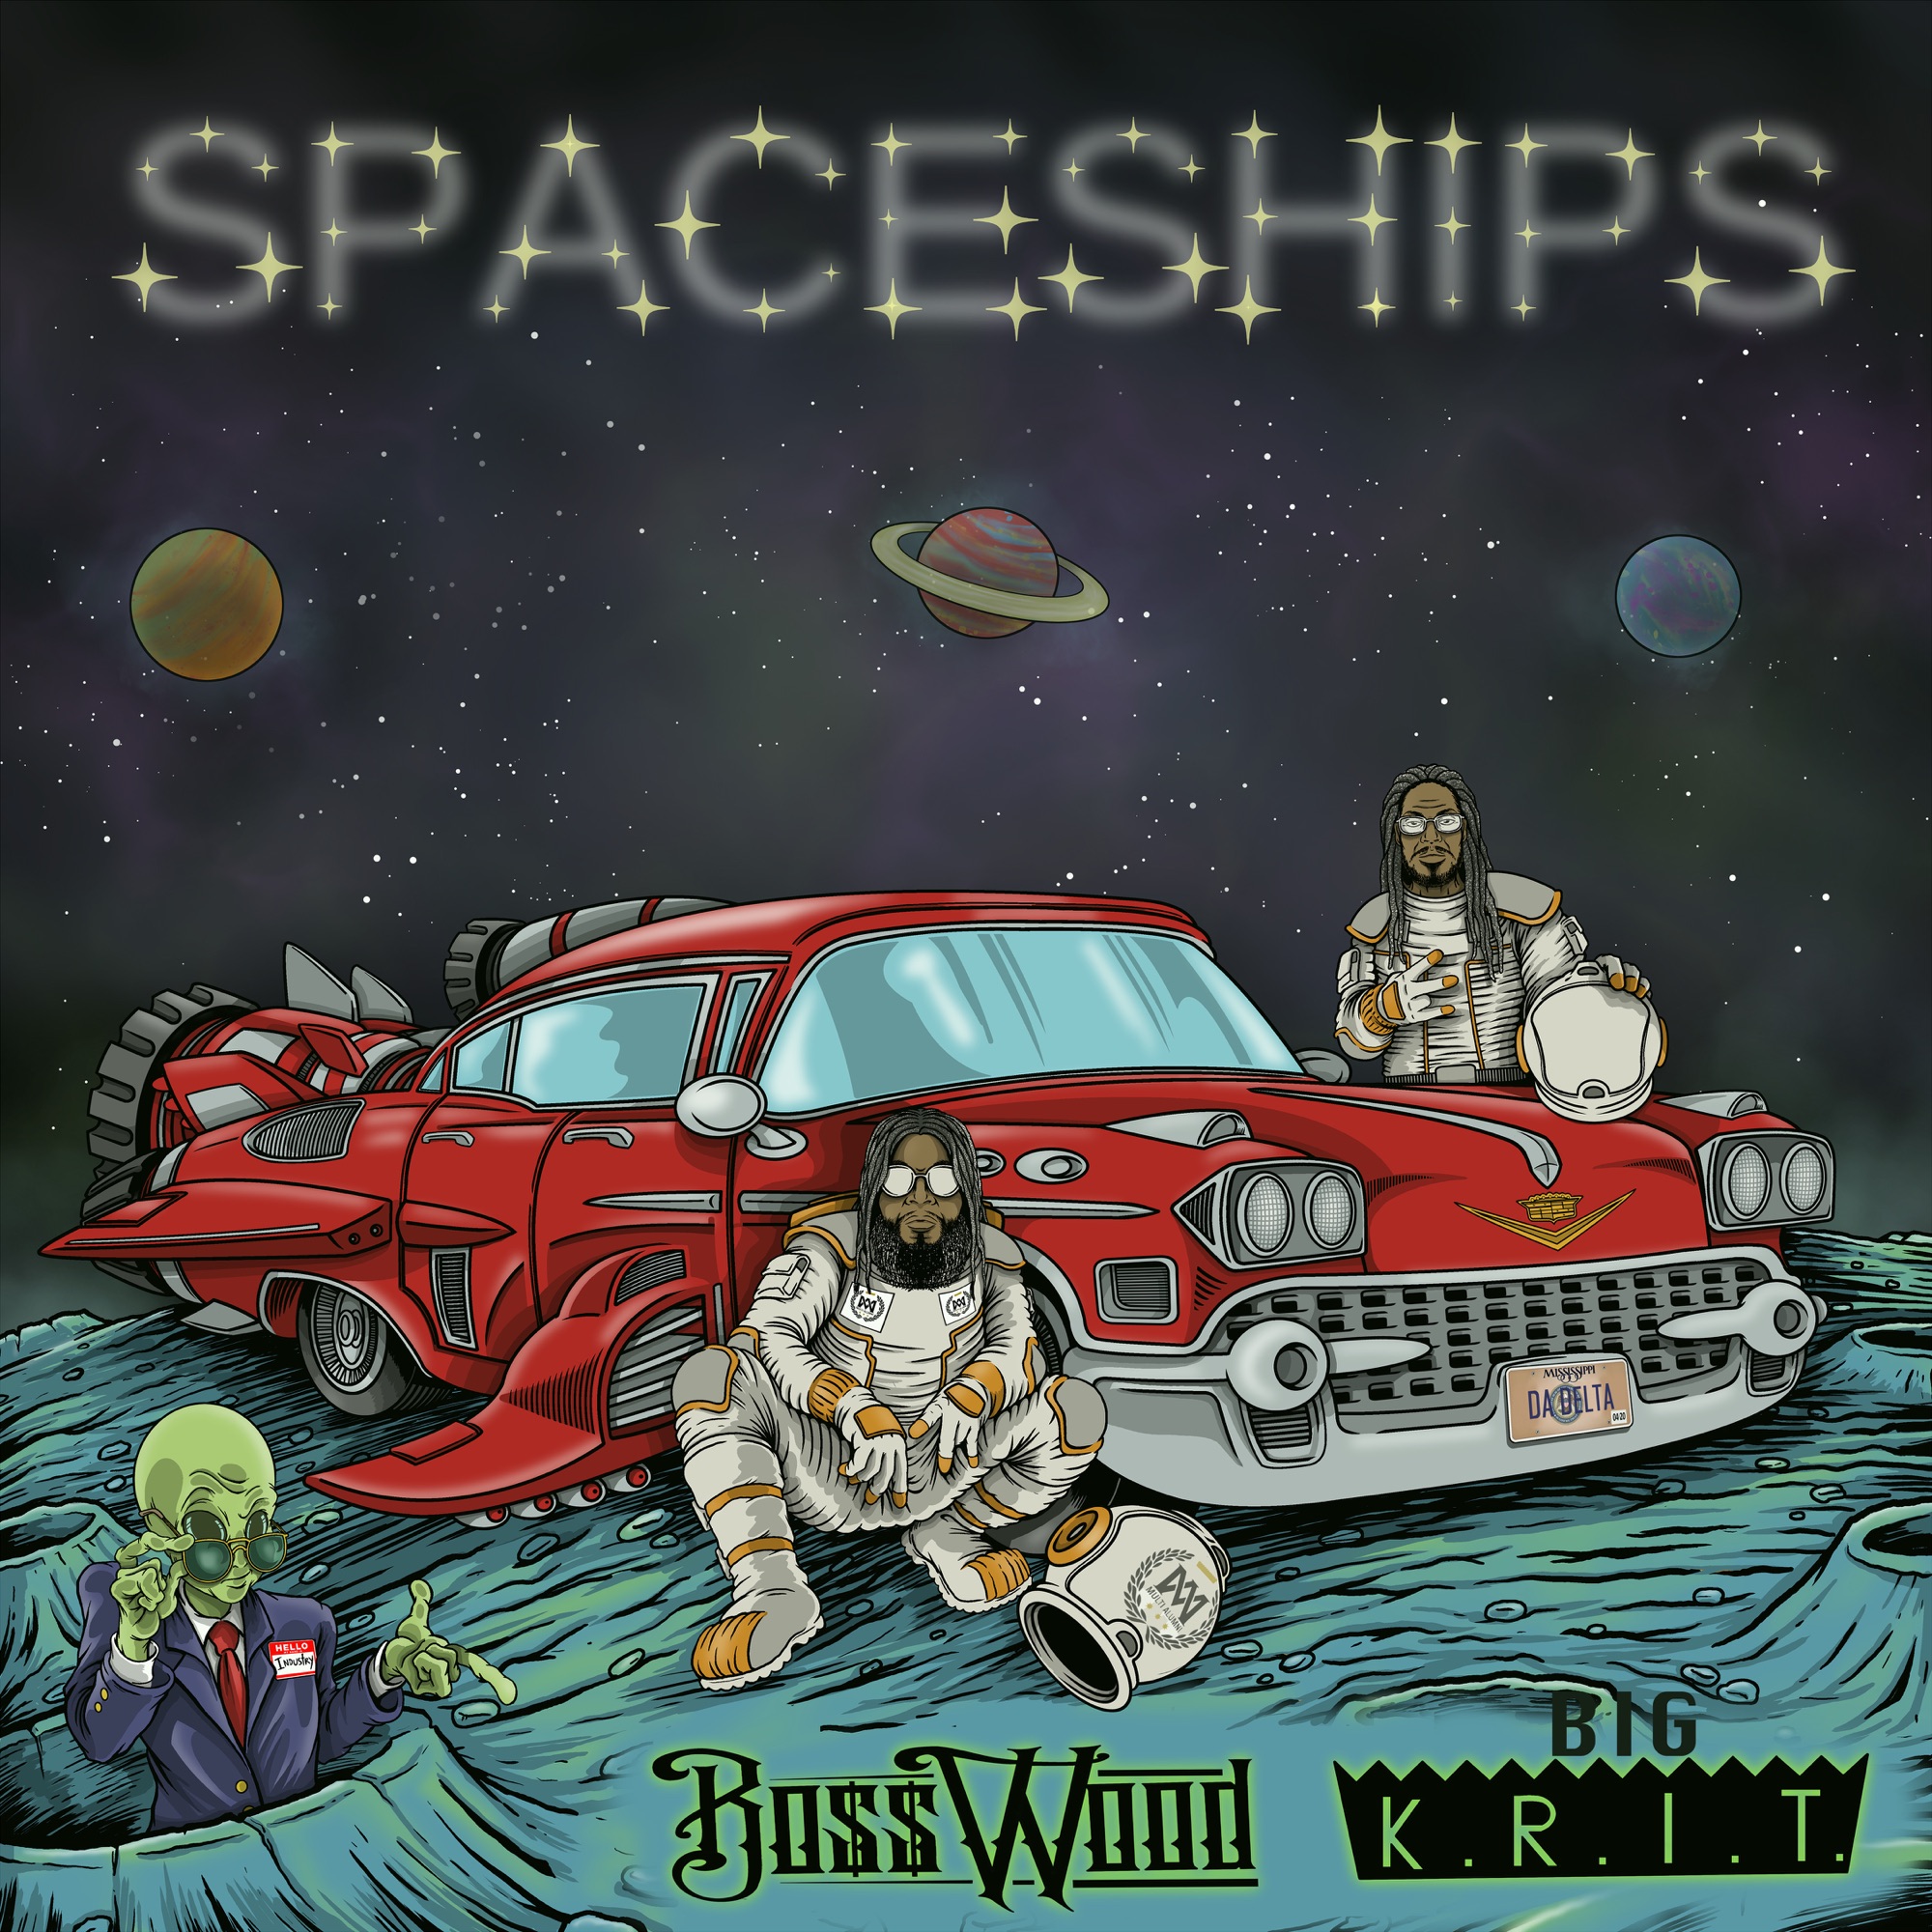 Boss Wood & Big K.R.I.T. - Spaceships - Single